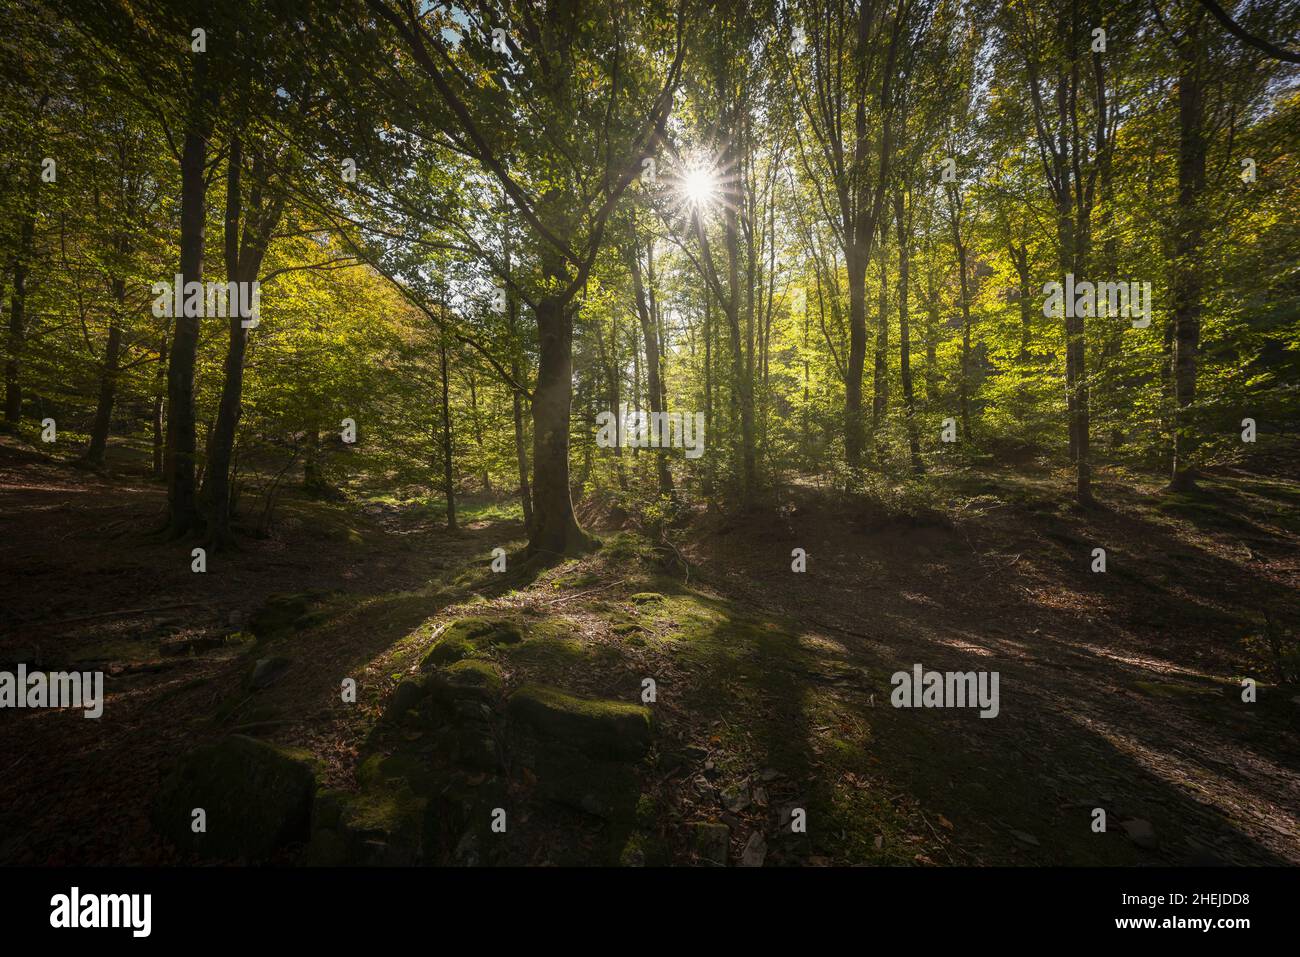 Acquerino nature reserve forest. Trees and sun, autumn season, Apennines, Tuscany region, Pistoia province, Italy, Europe Stock Photo